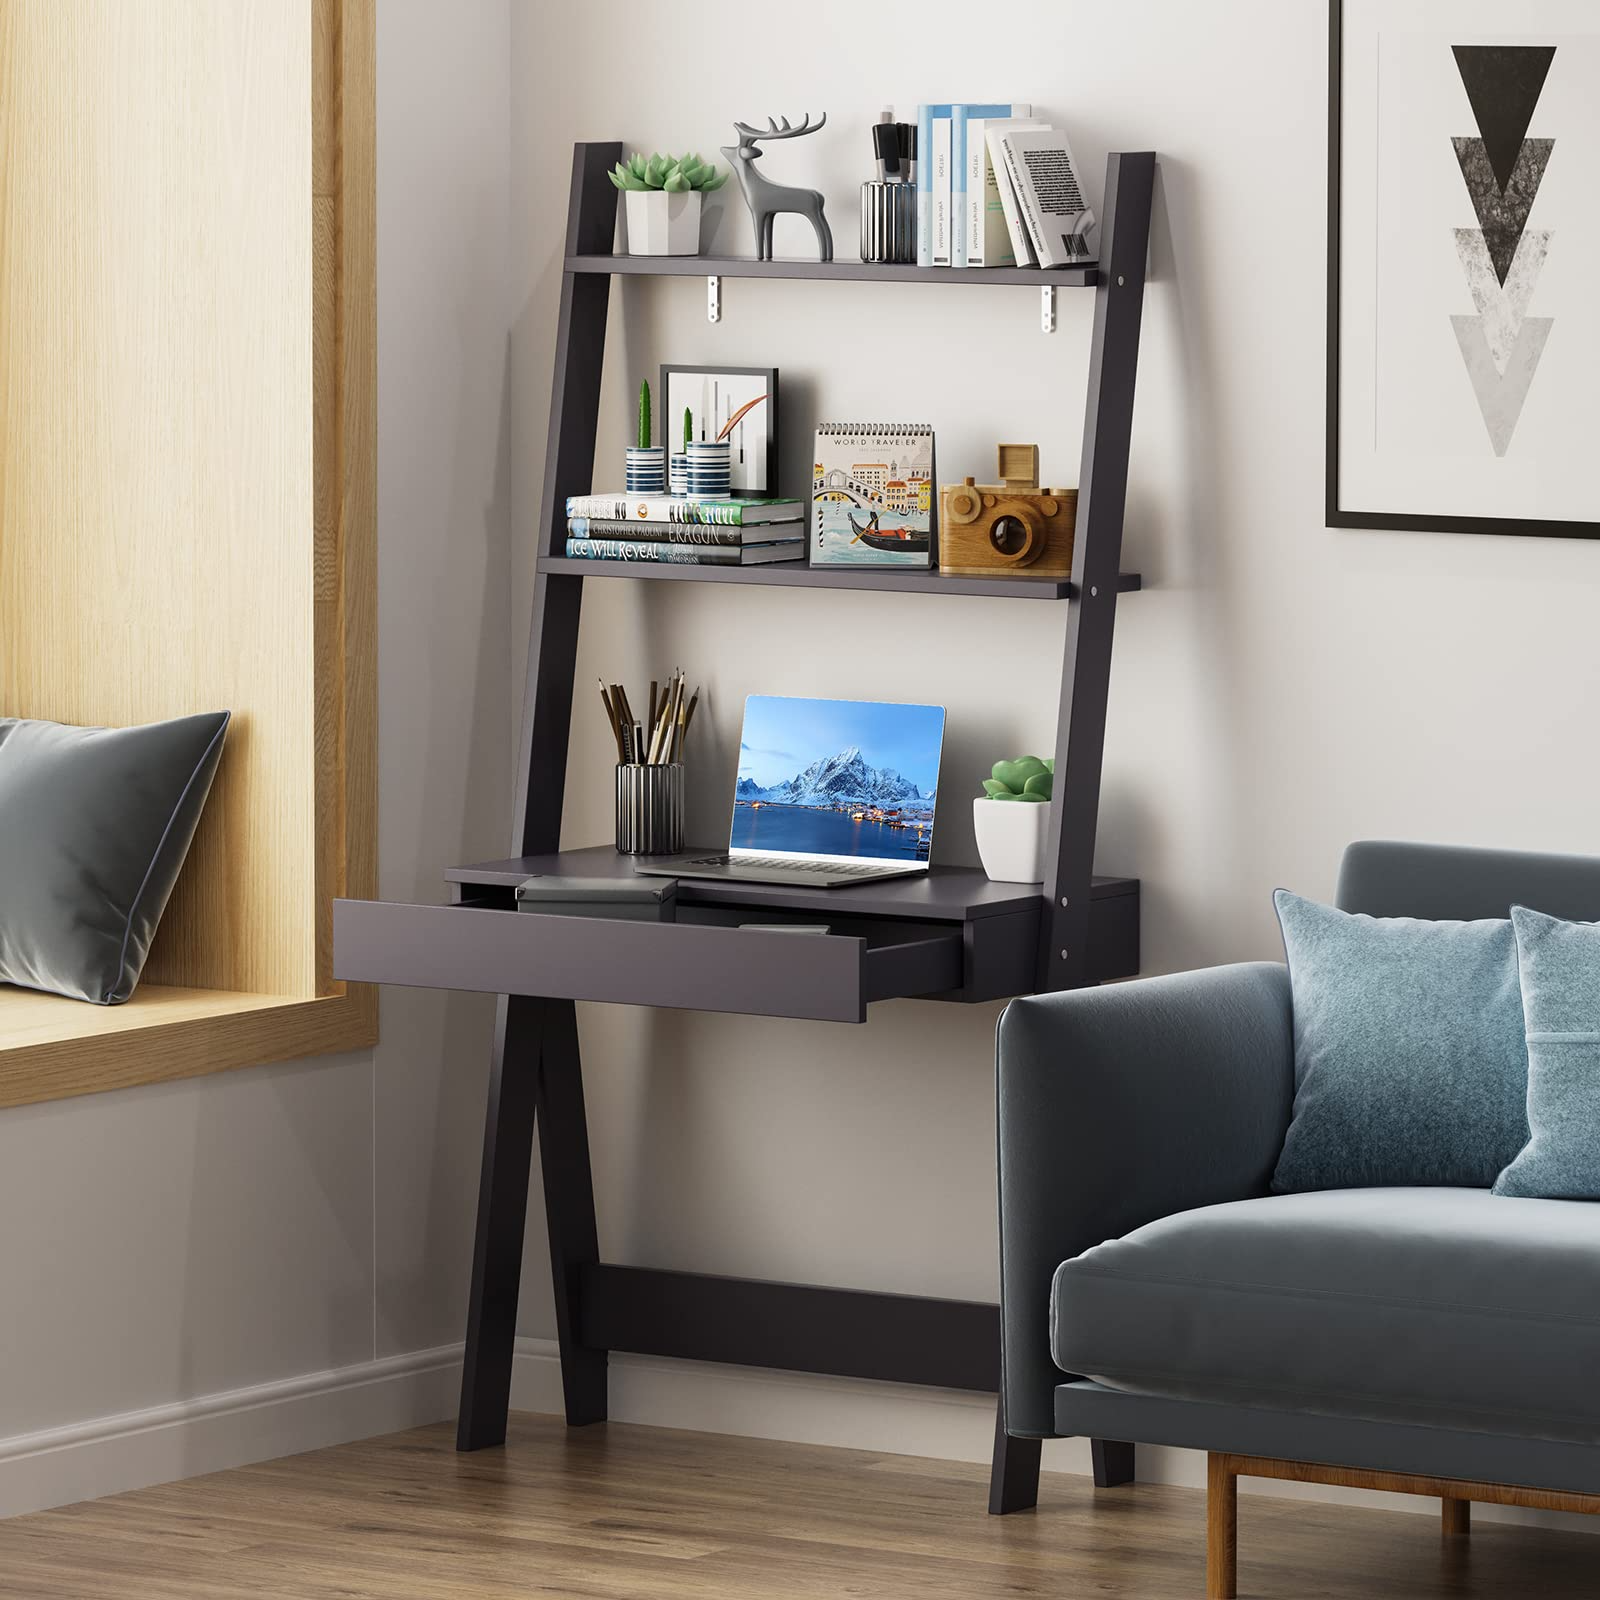 4 Styles of Racks or Shelves for Living Space